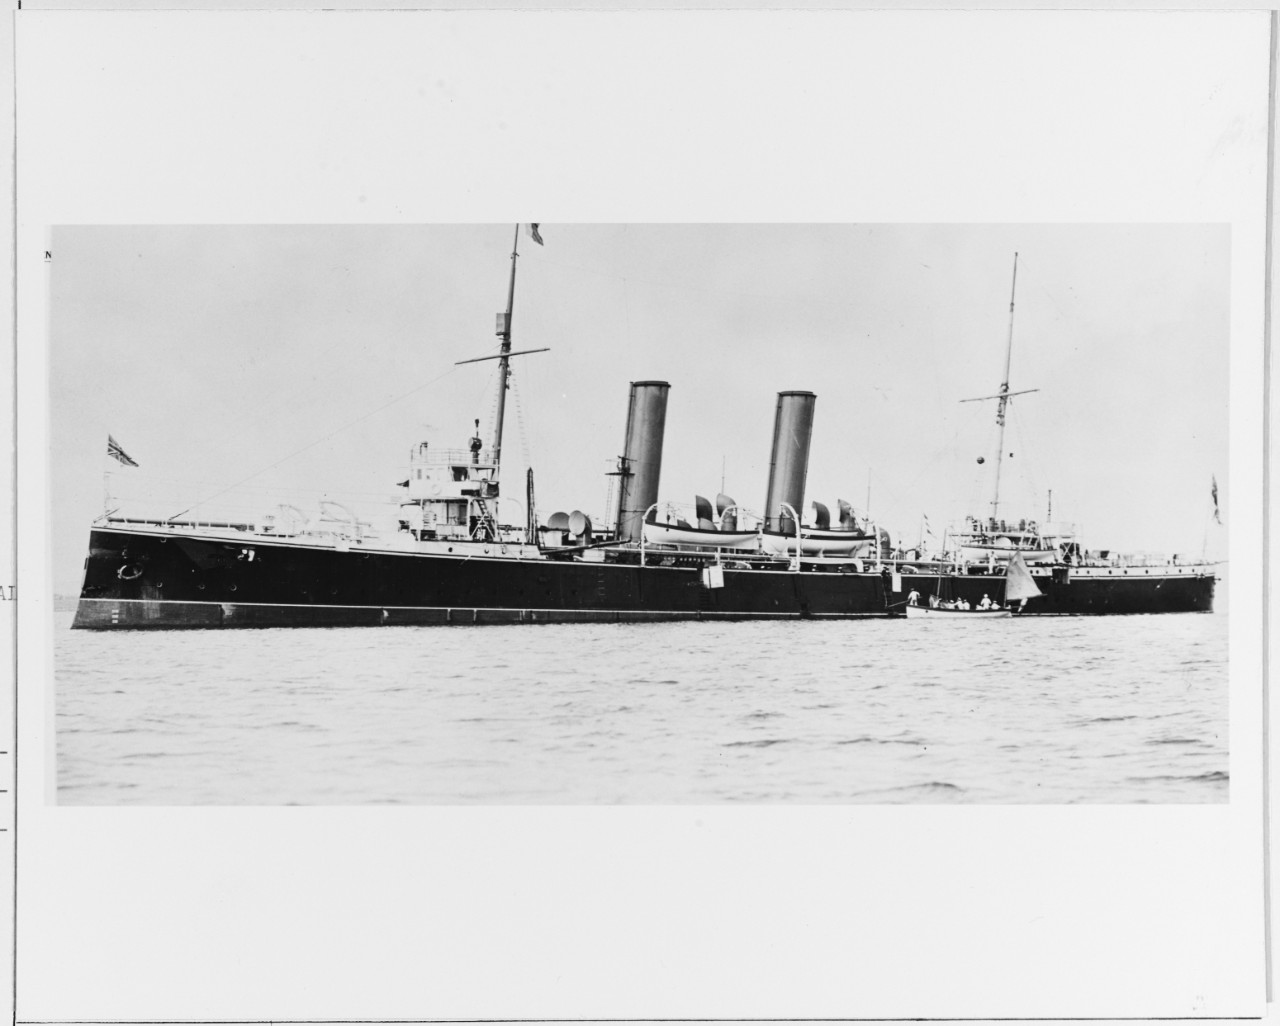 HMS RETRIBUTION (British cruiser, 1892)